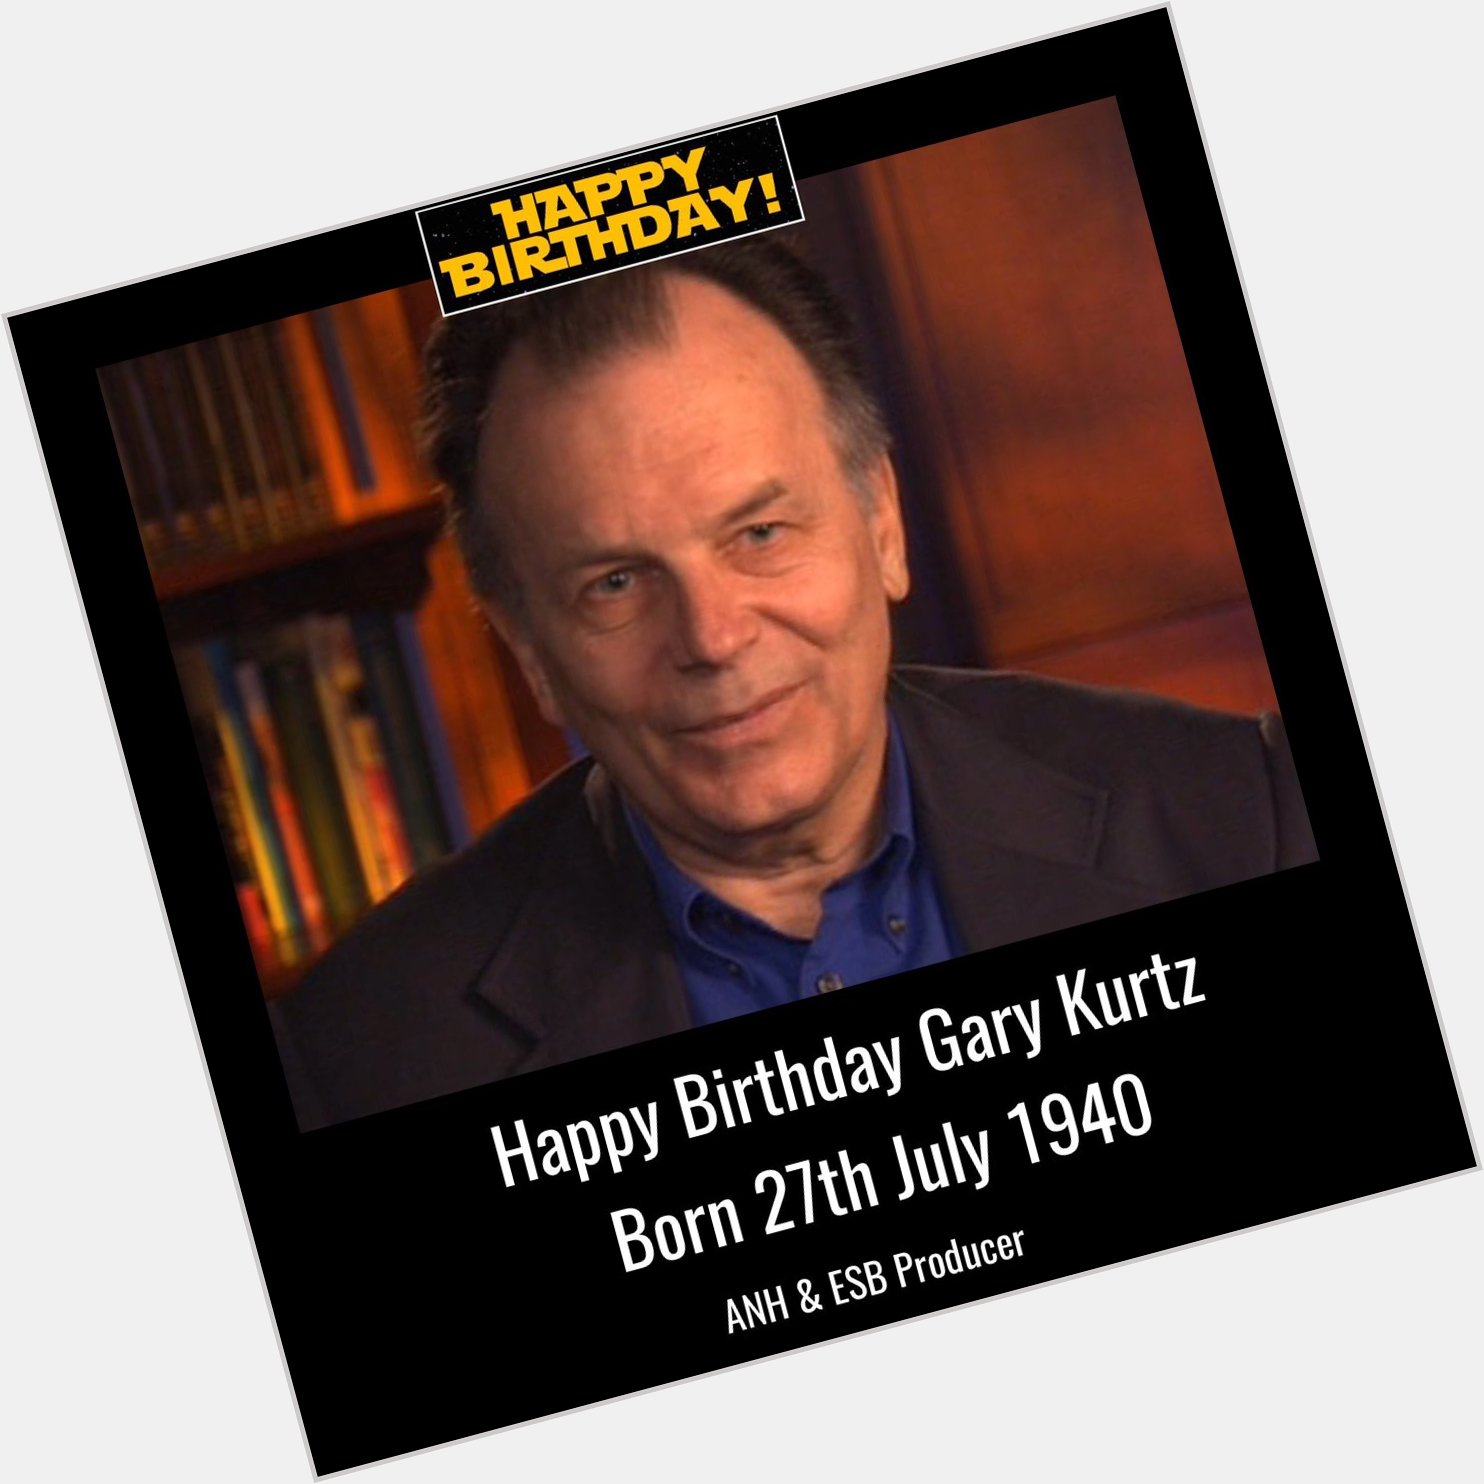 Happy Birthday Gary Kurtz, Star Wars producer. Born 27th July 1940.  